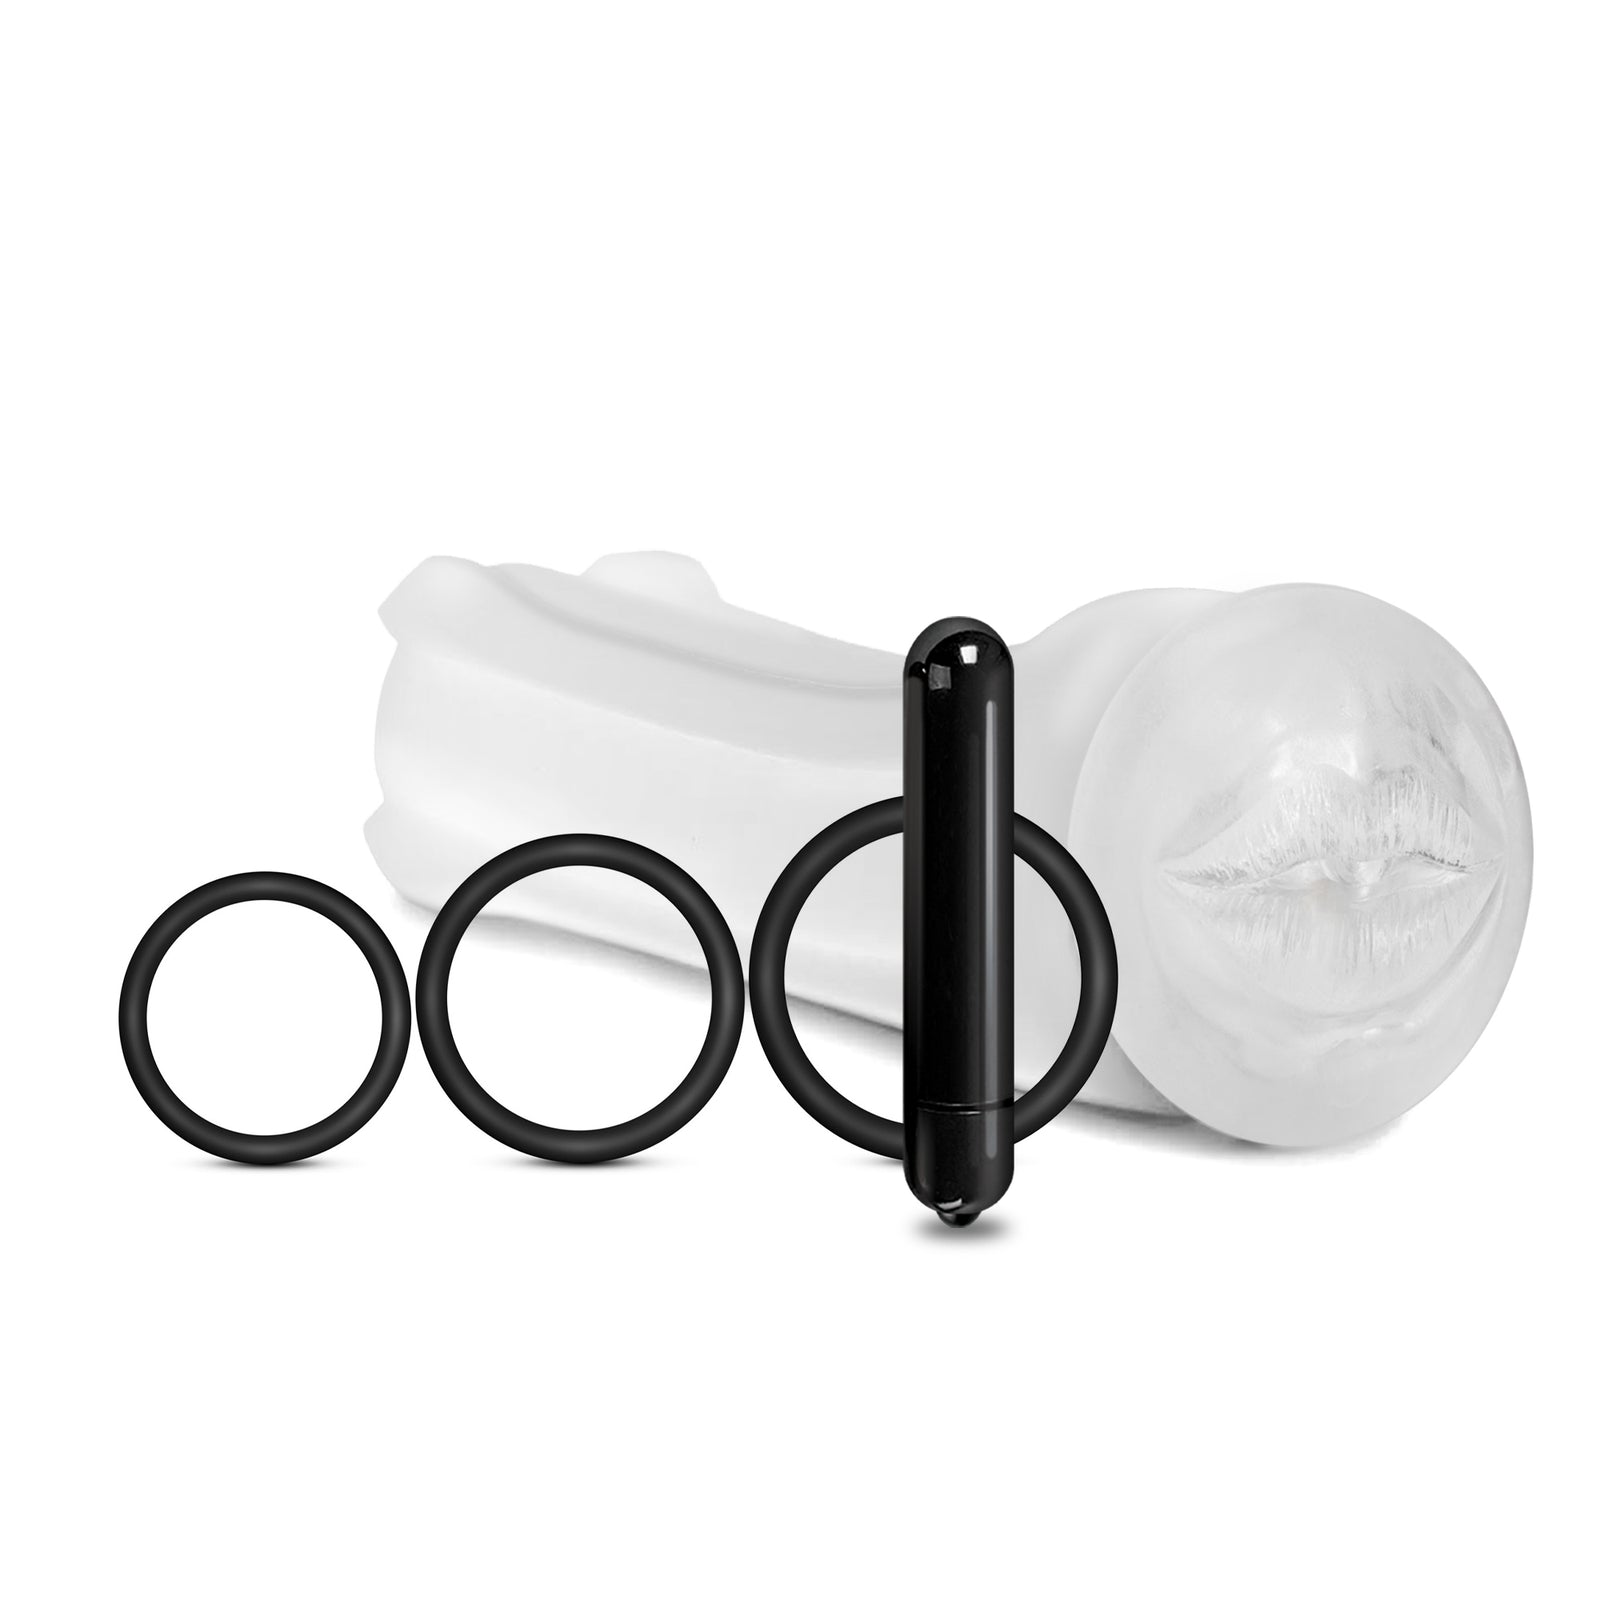 MSTR B8 Vibrating Oral Pack, Lip Service, Five PC Kit - THES